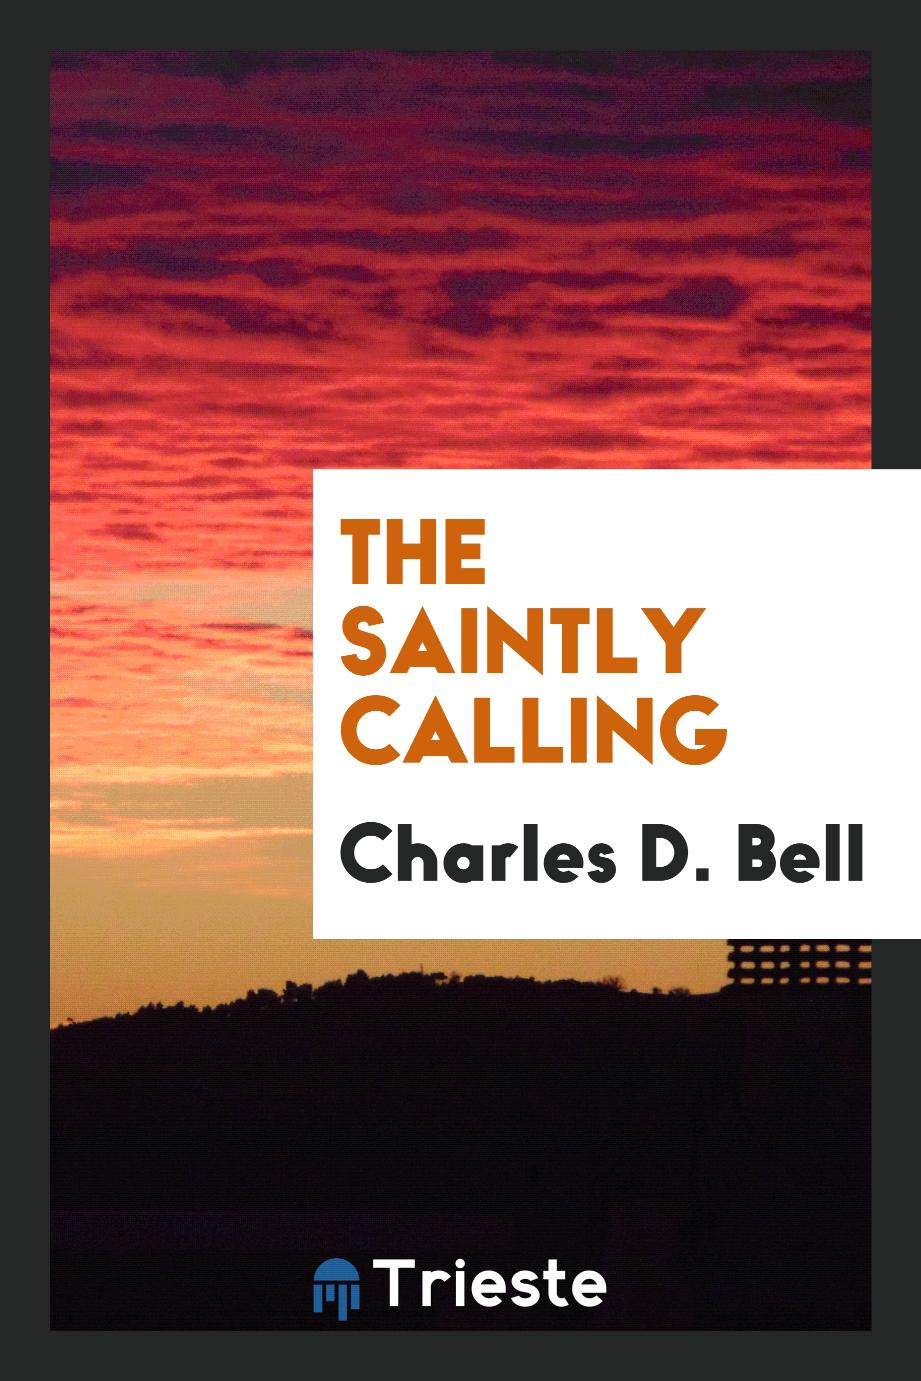 The Saintly Calling